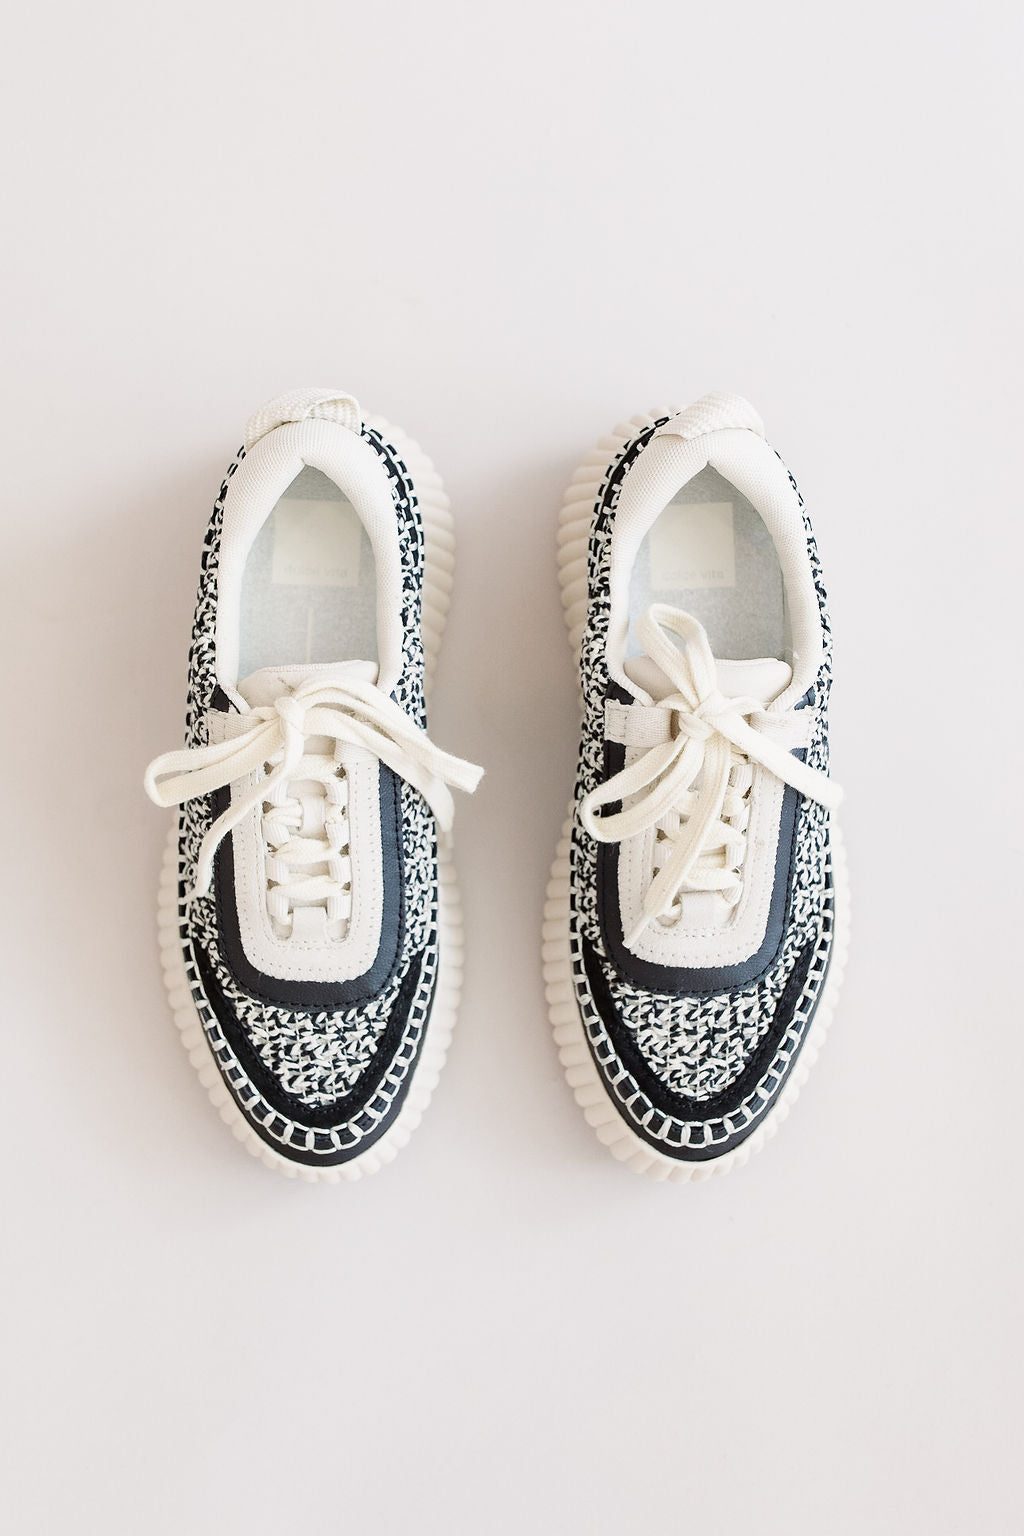 Dolce Vita | Dolen Sneaker | White & Black - Poppy and Stella